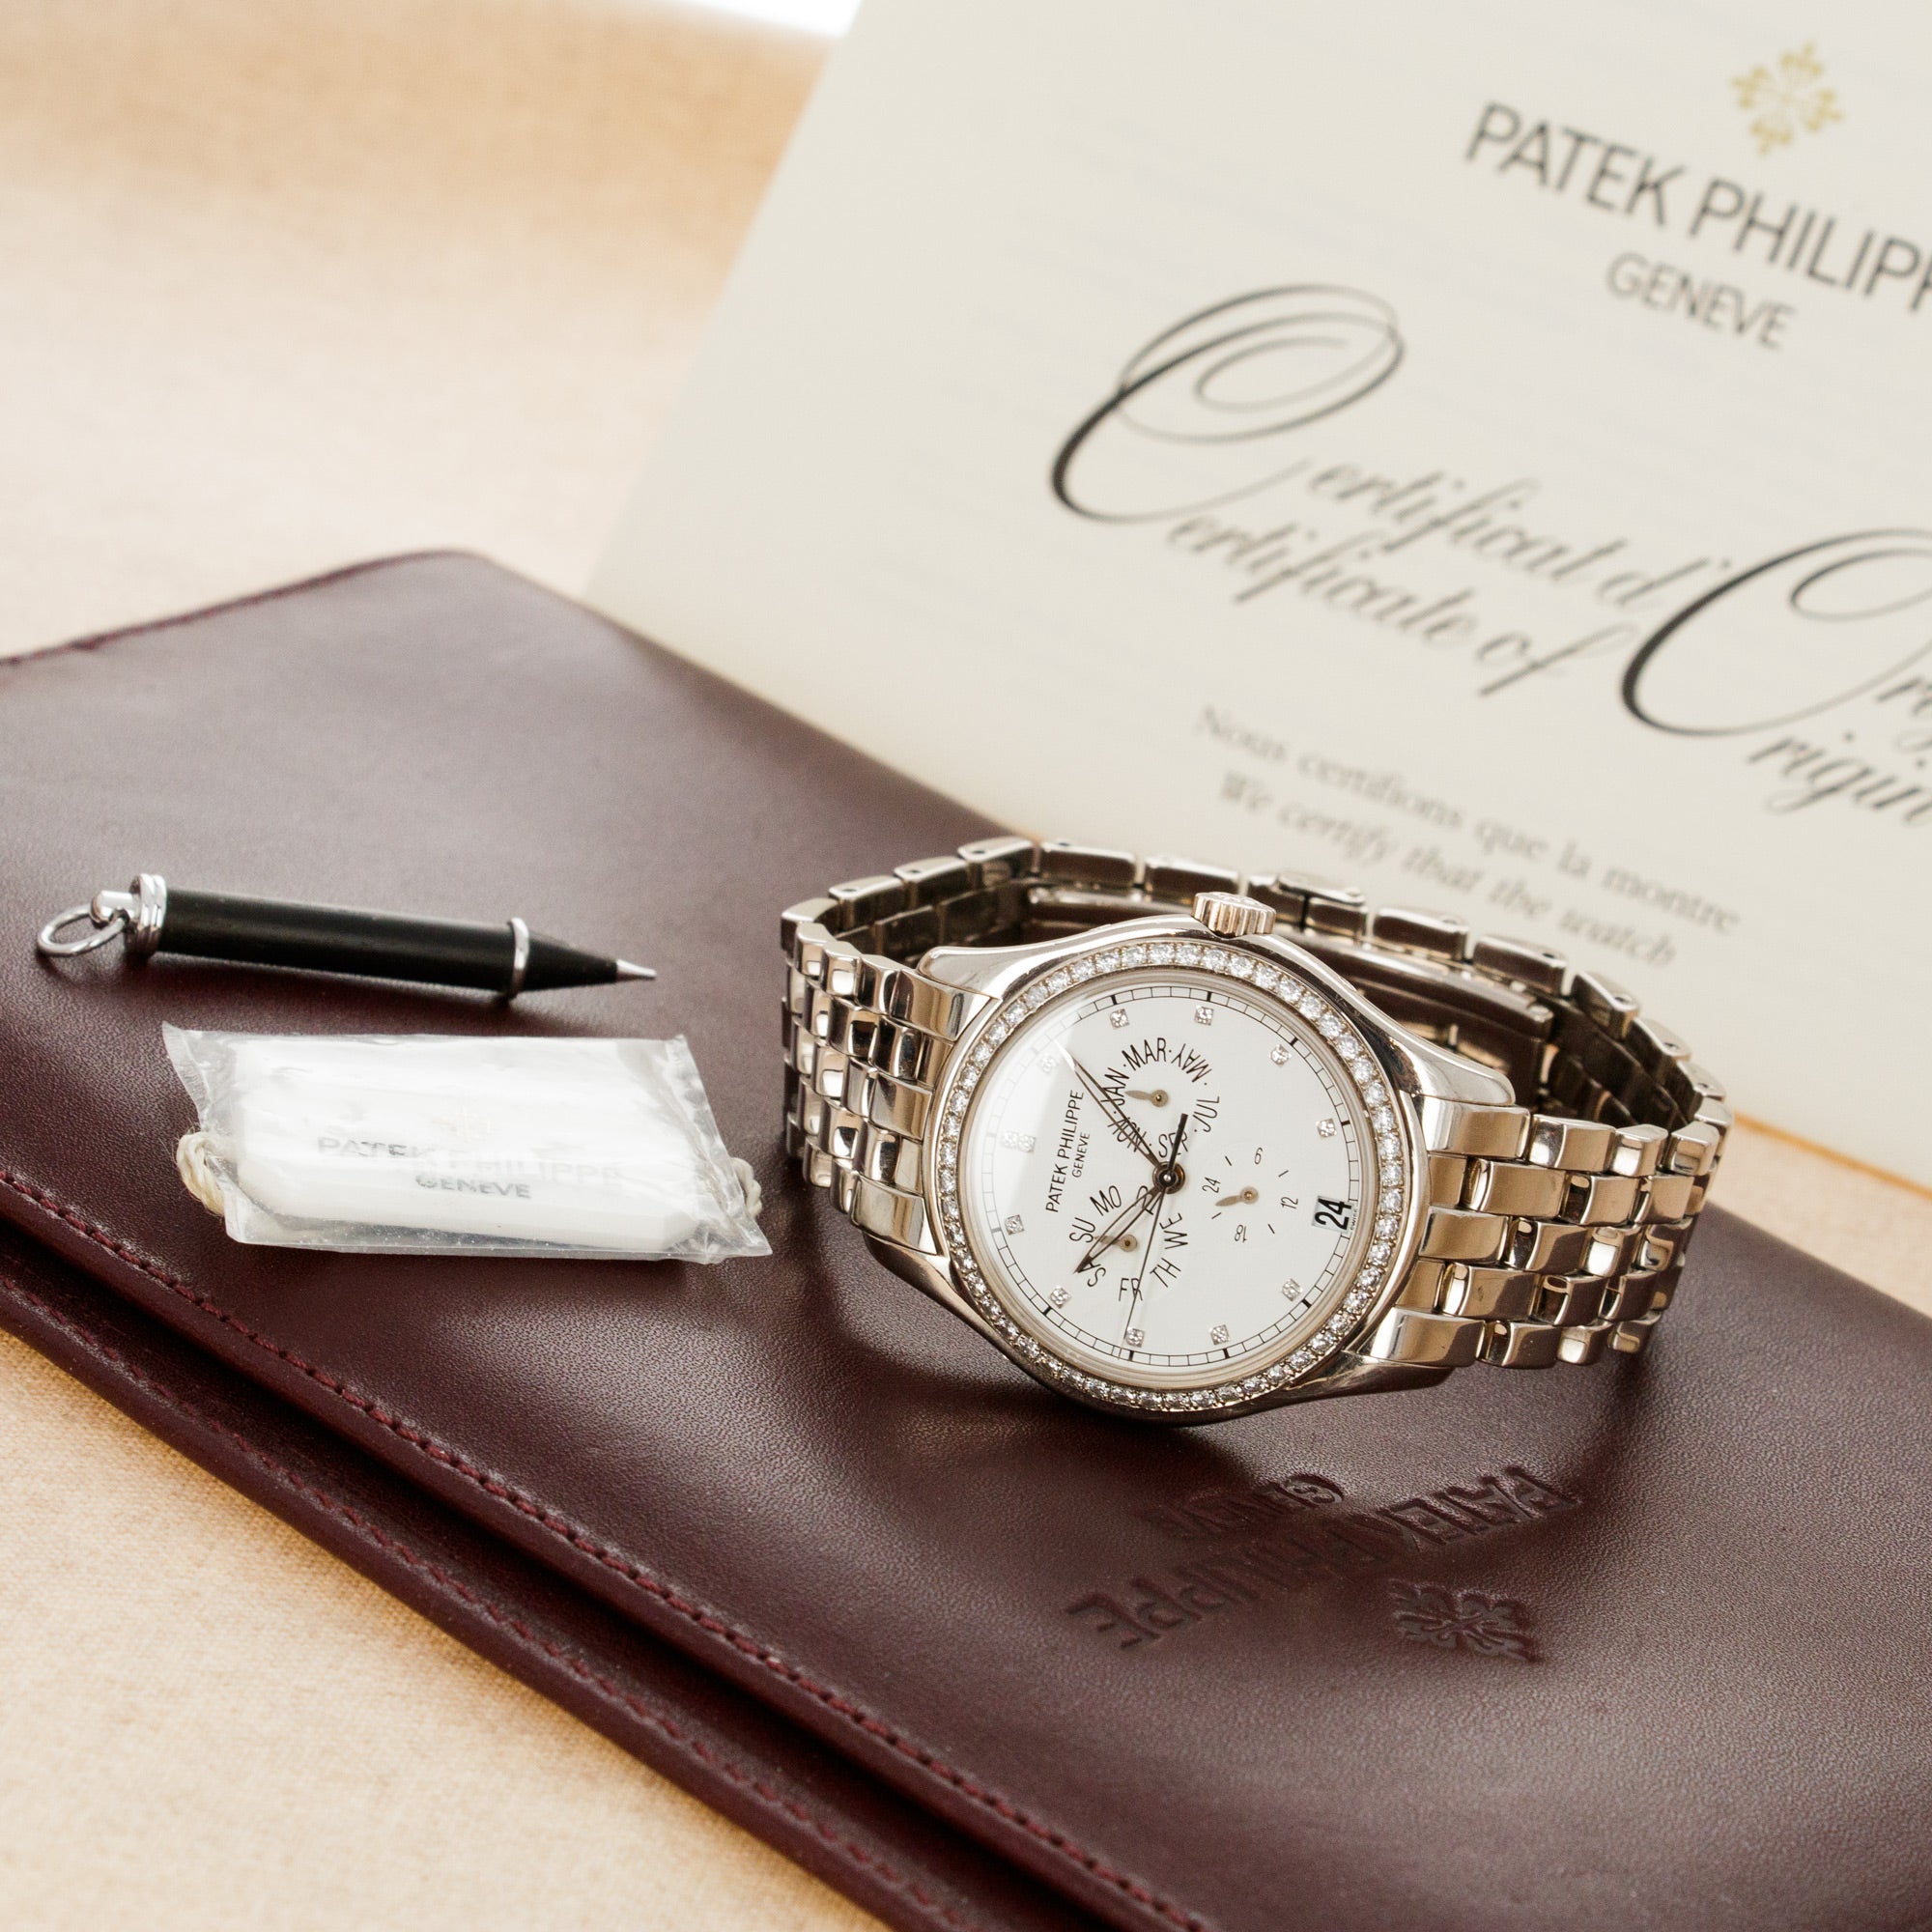 Patek Philippe - Patek Philippe White Gold Annual Calendar Watch Ref. 5037 - The Keystone Watches